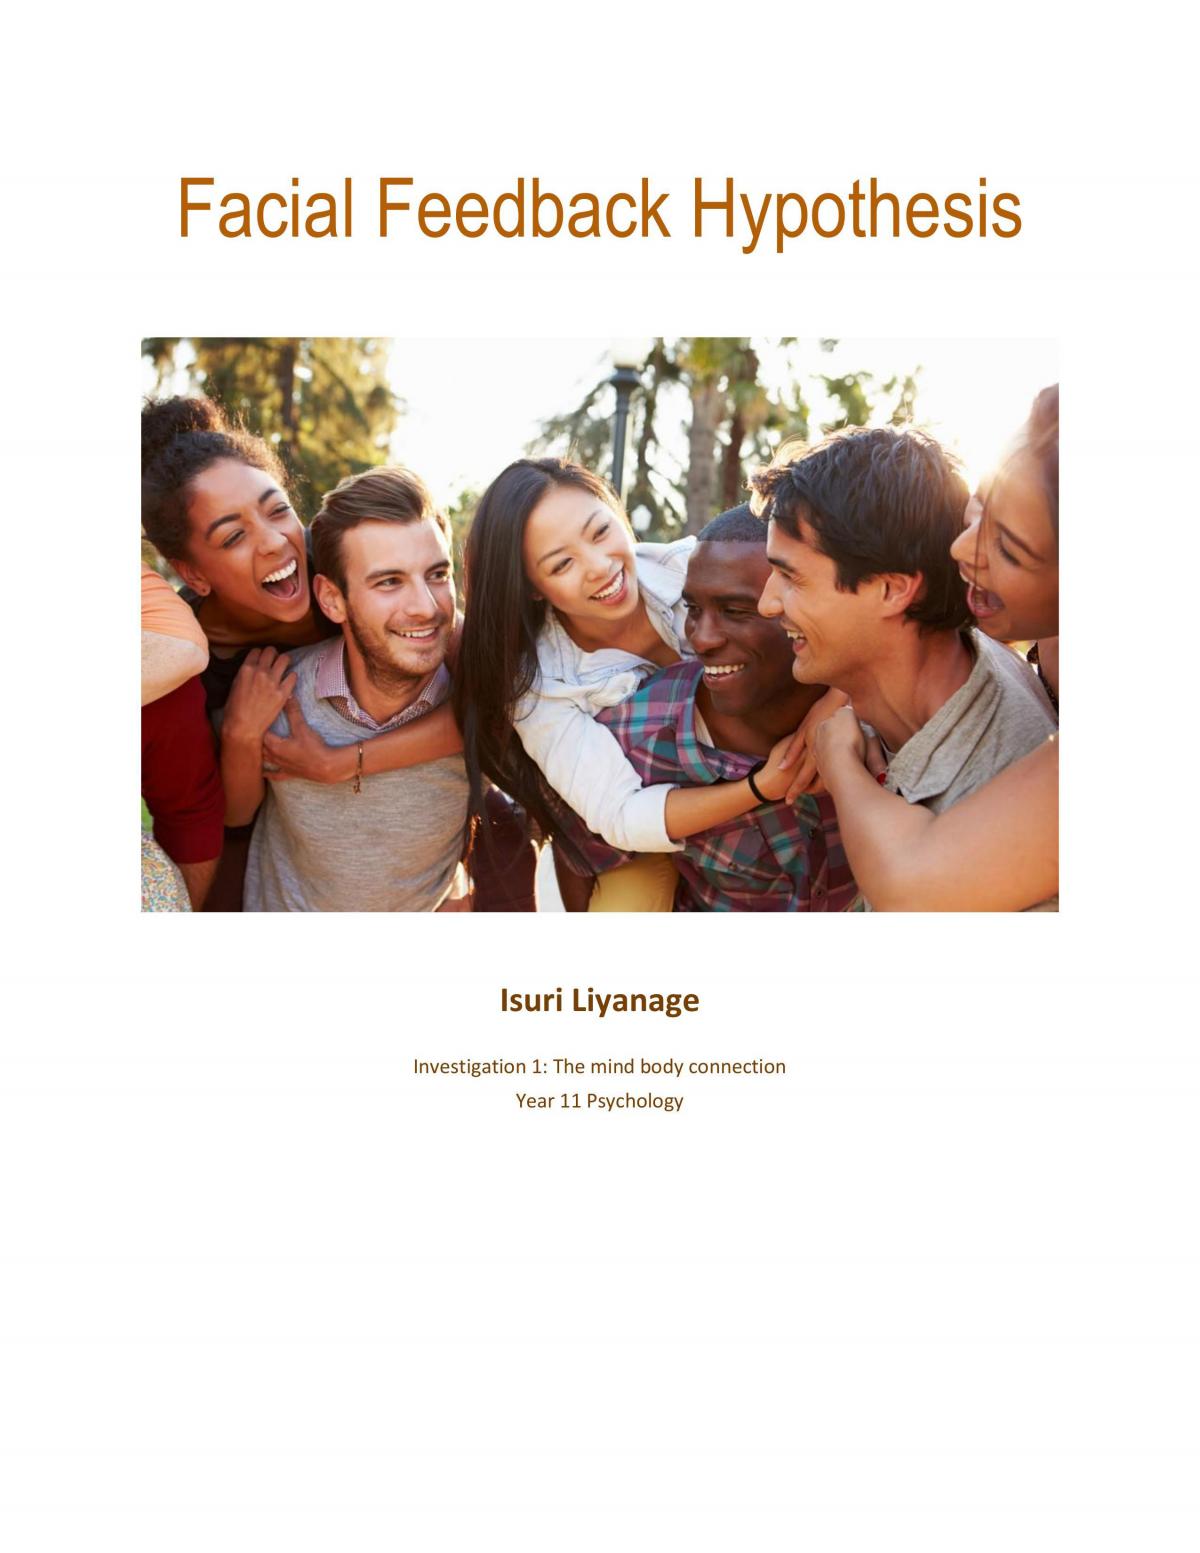 facial feedback hypothesis in psychology